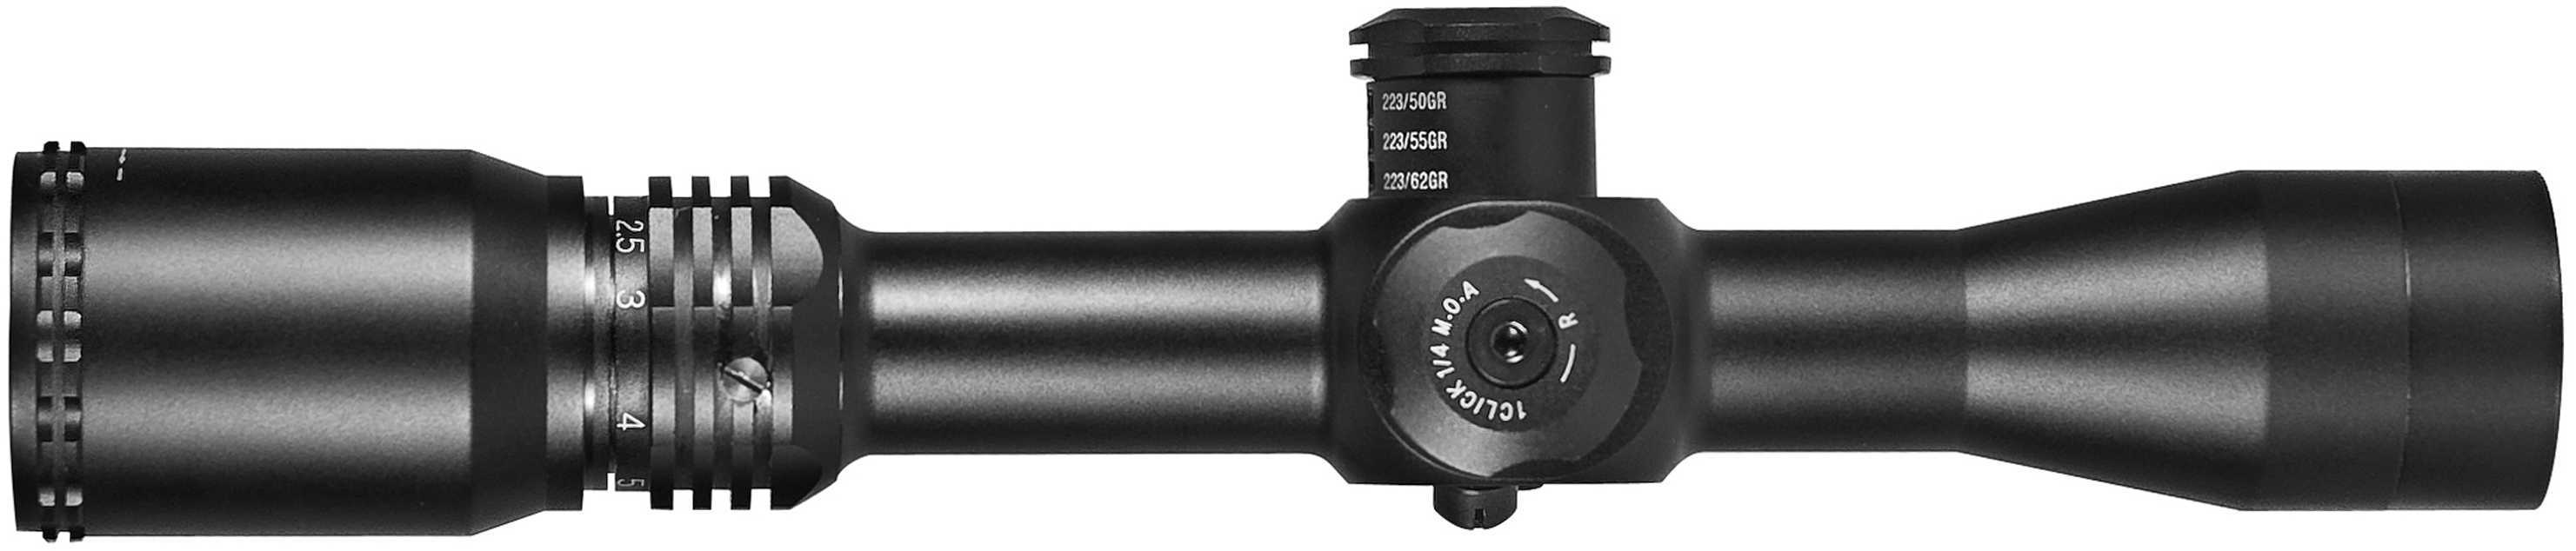 Barska Optics 2-7x32 3G Point Black Riflescope .223 BDC Model AC11384